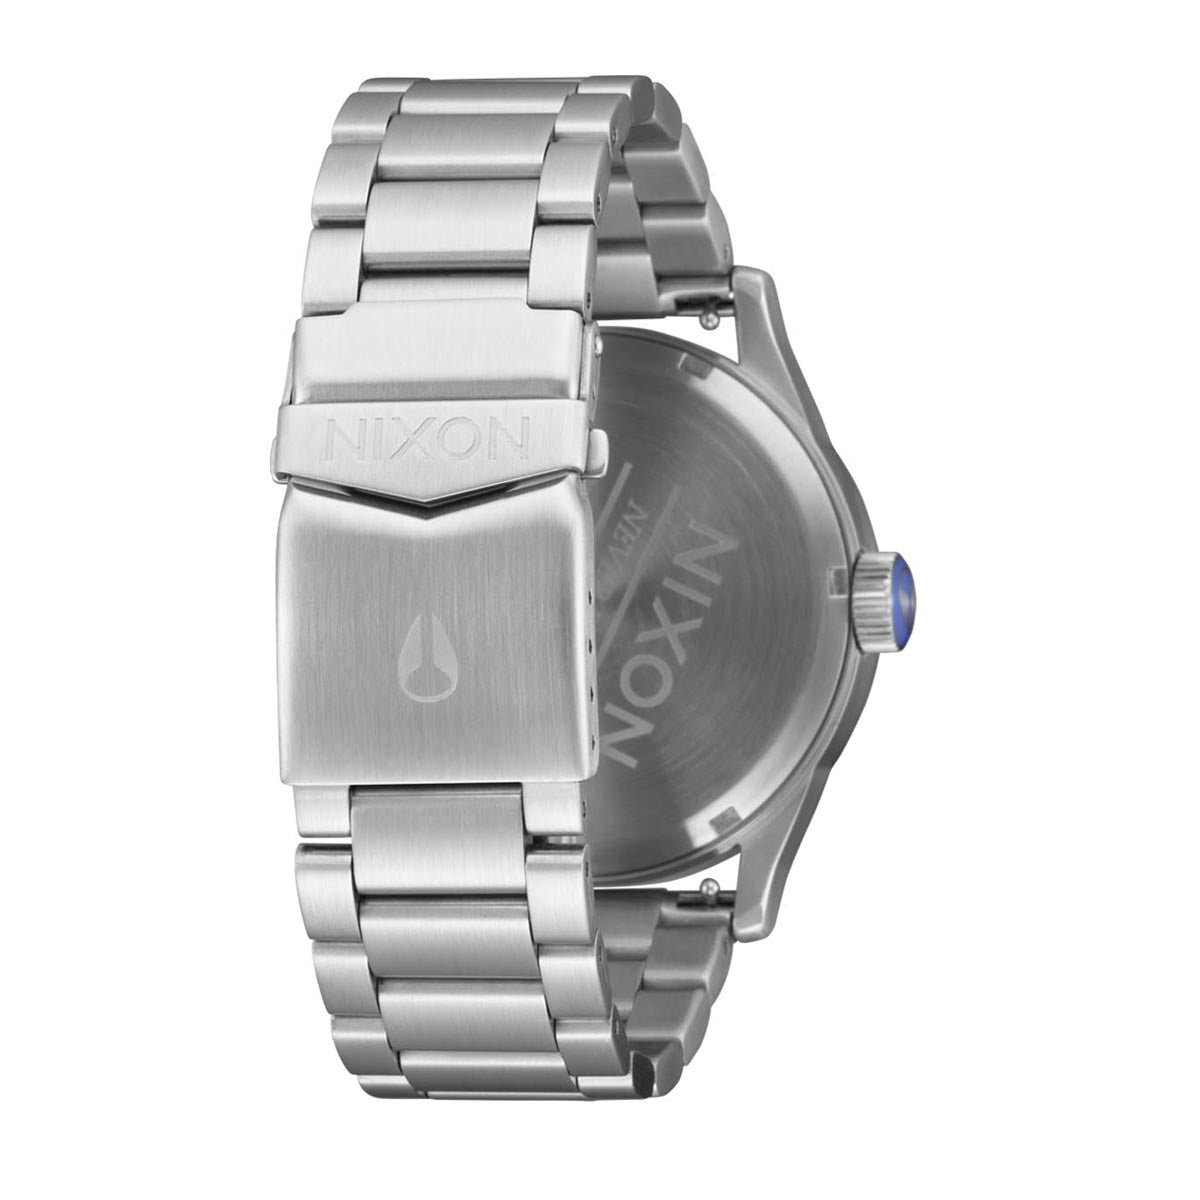 Nixon Sentry Stainless Steel Watch - Silver/Cobalt image 4